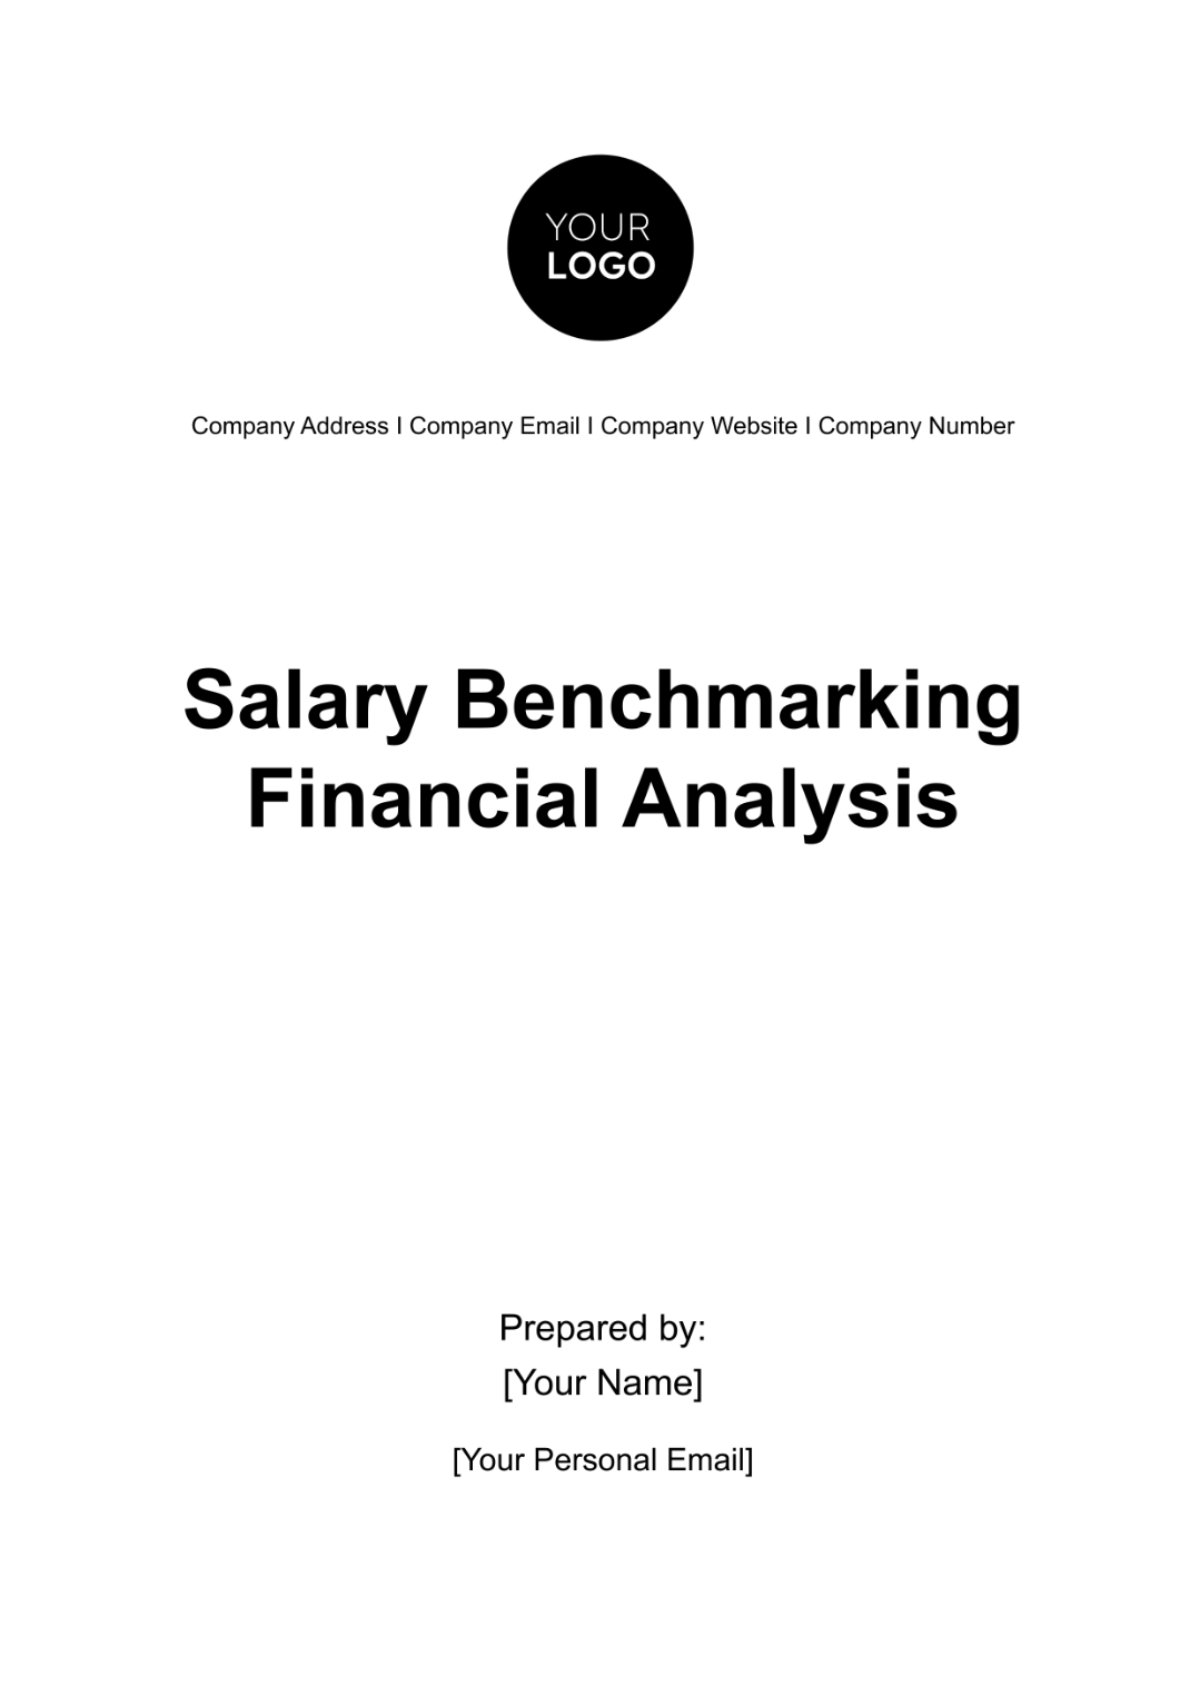 Salary Benchmarking Financial Analysis HR Template